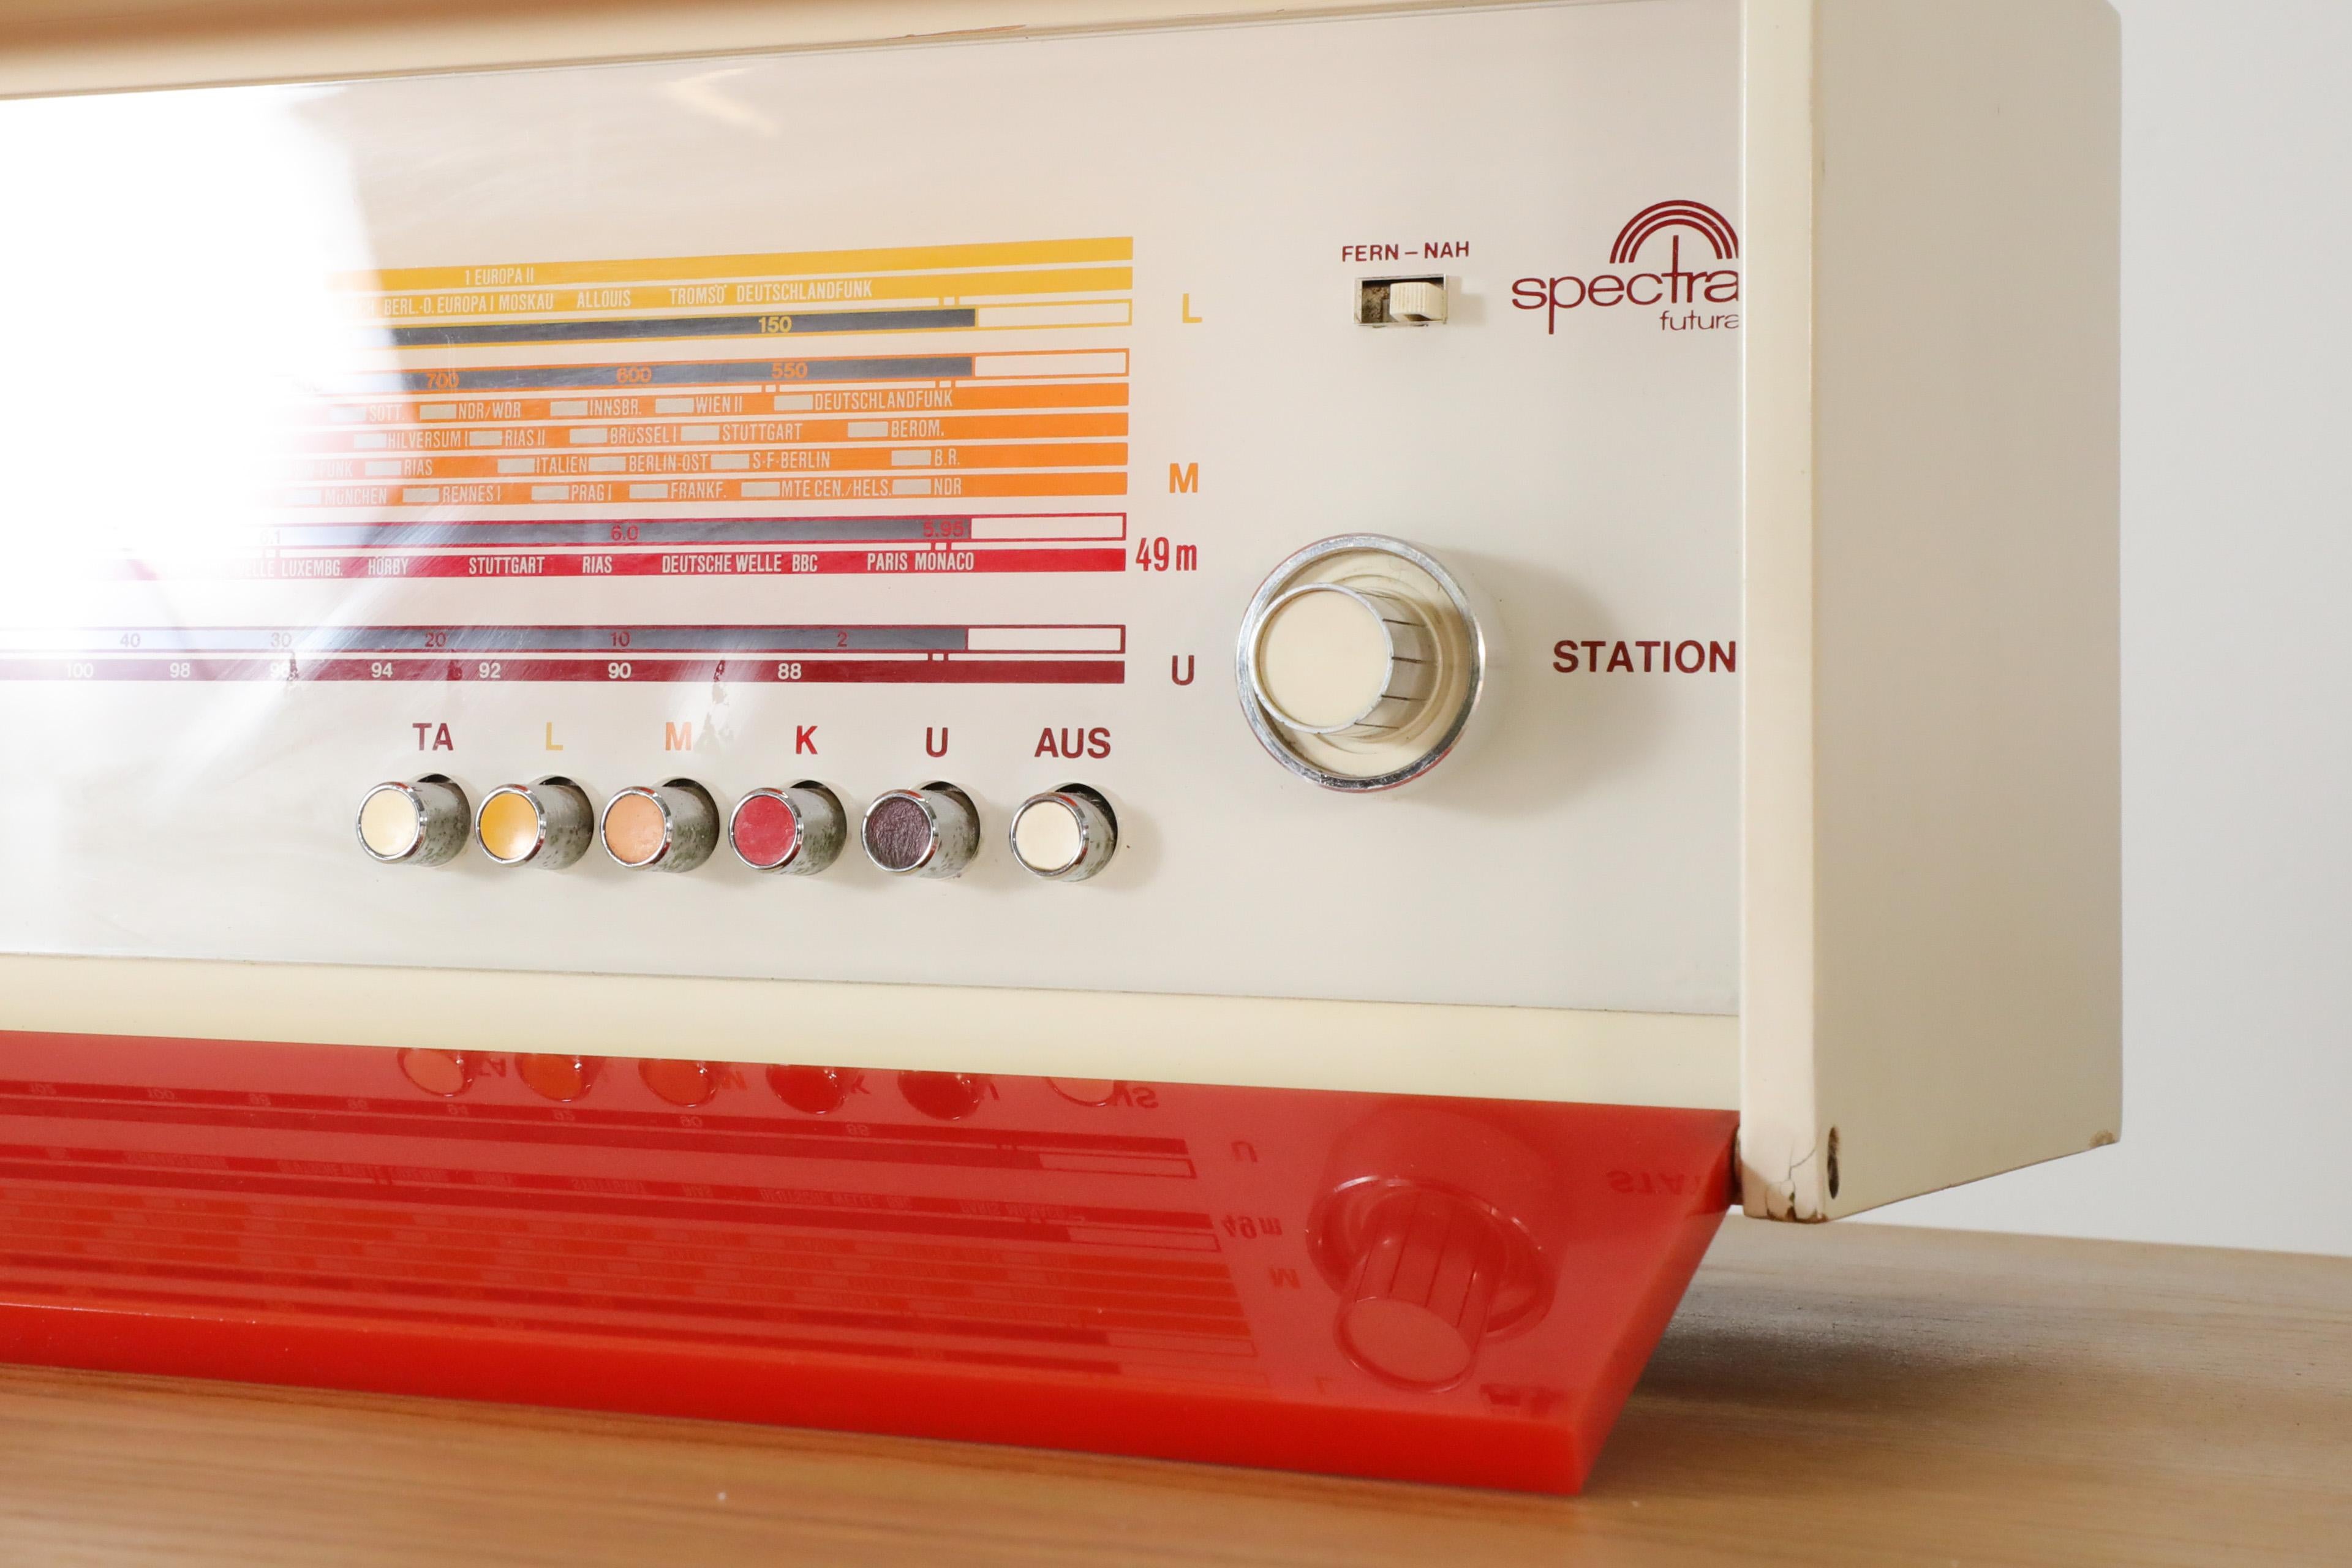 Raymond Loewy Designed Nordmende Spectra Futura Transistor Radio in Red & Orange 1